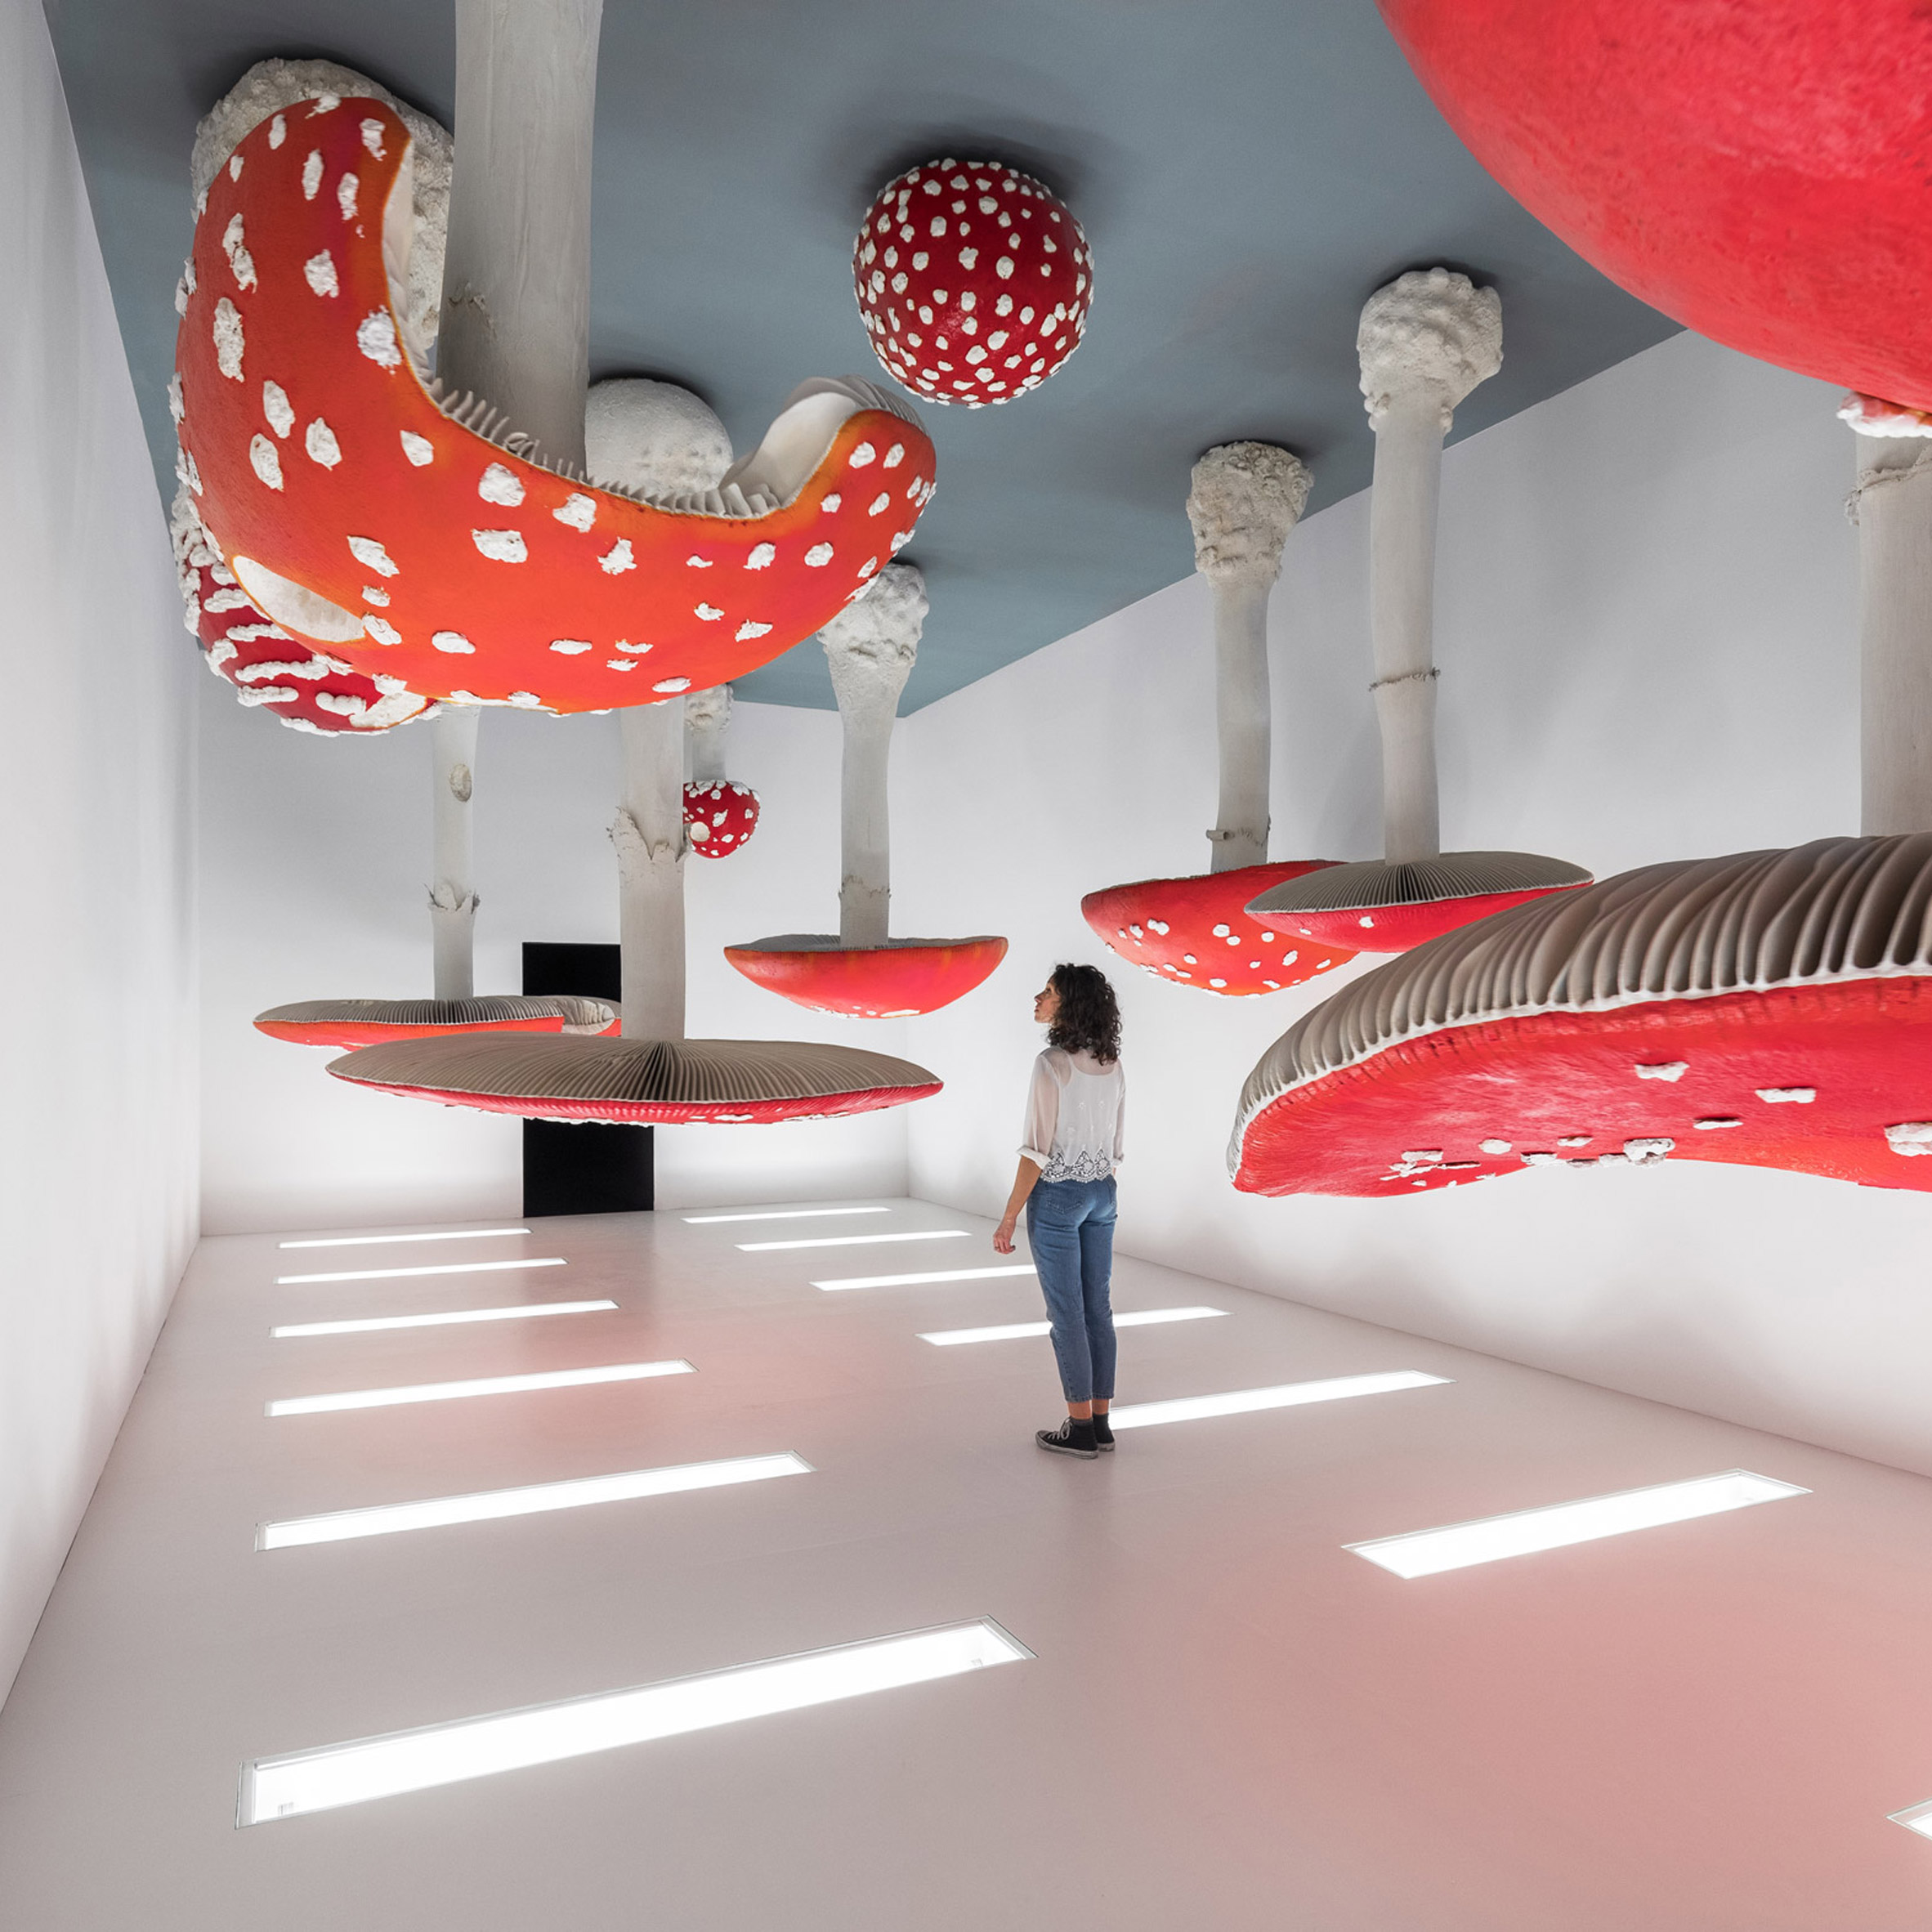 Kauwgom stropdas Harde wind OMA's Fondazione Prada Torre opens with quirky interiors